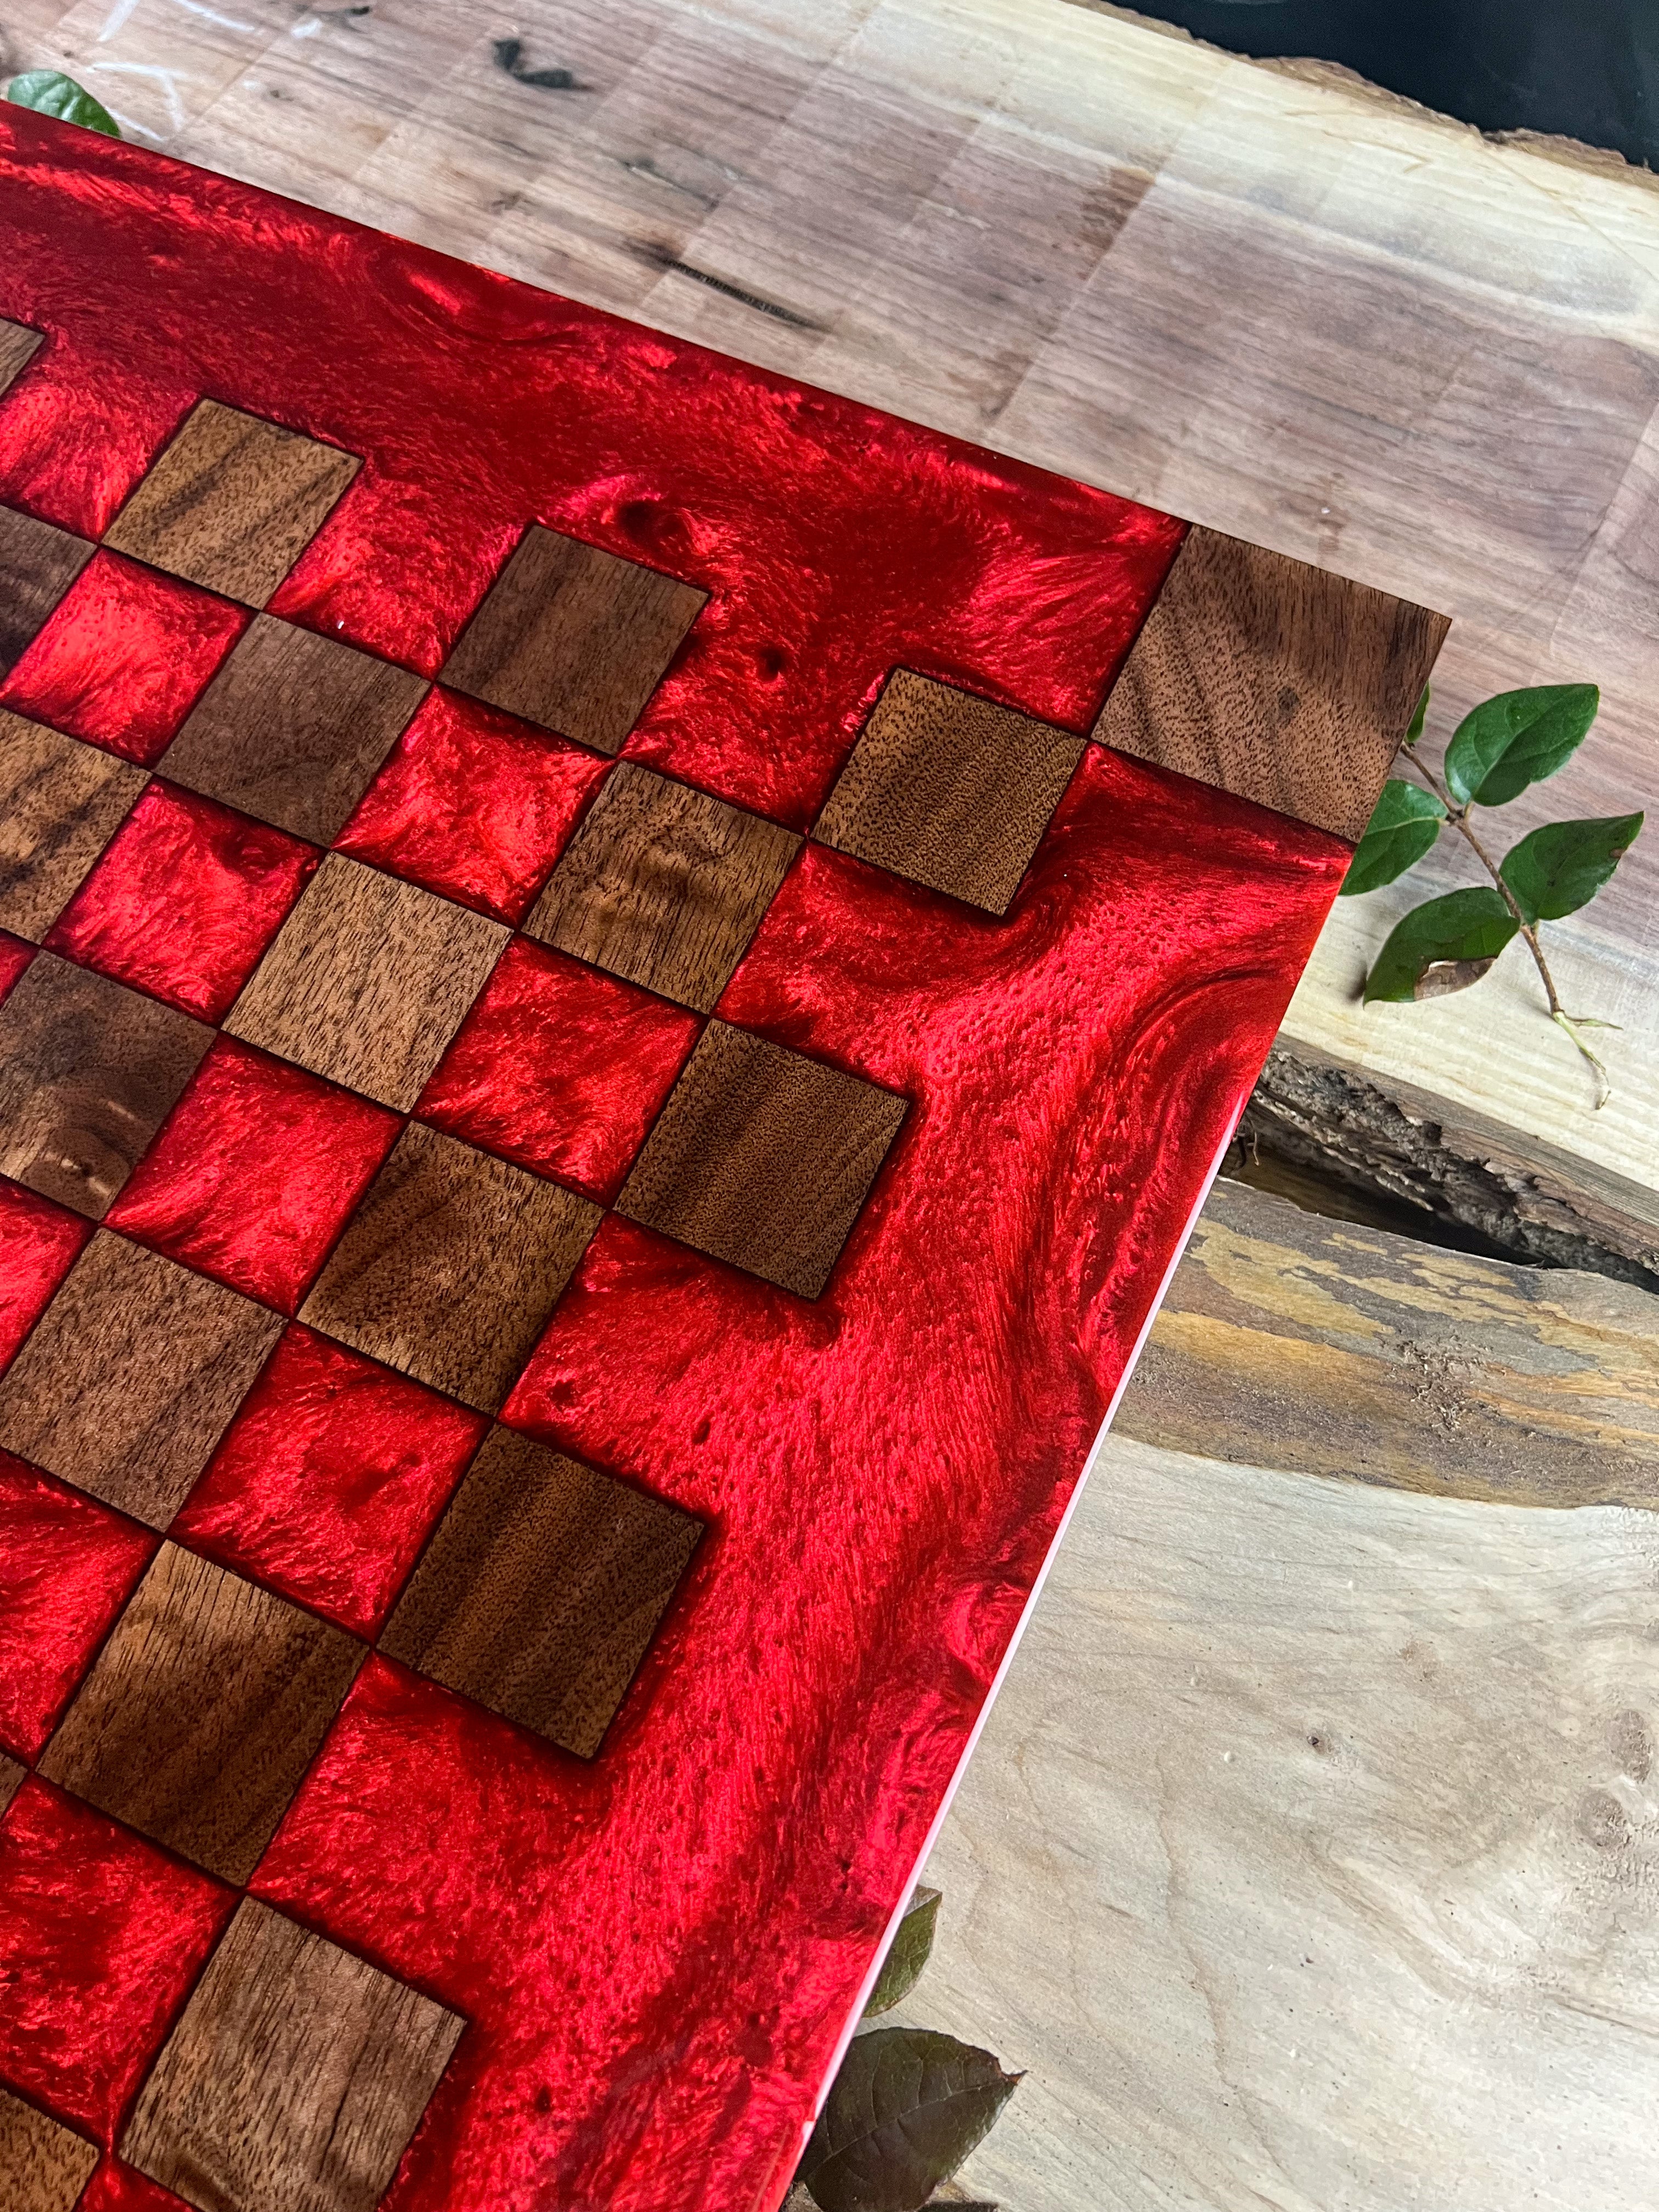 Black Walnut Red Lava Chess Board